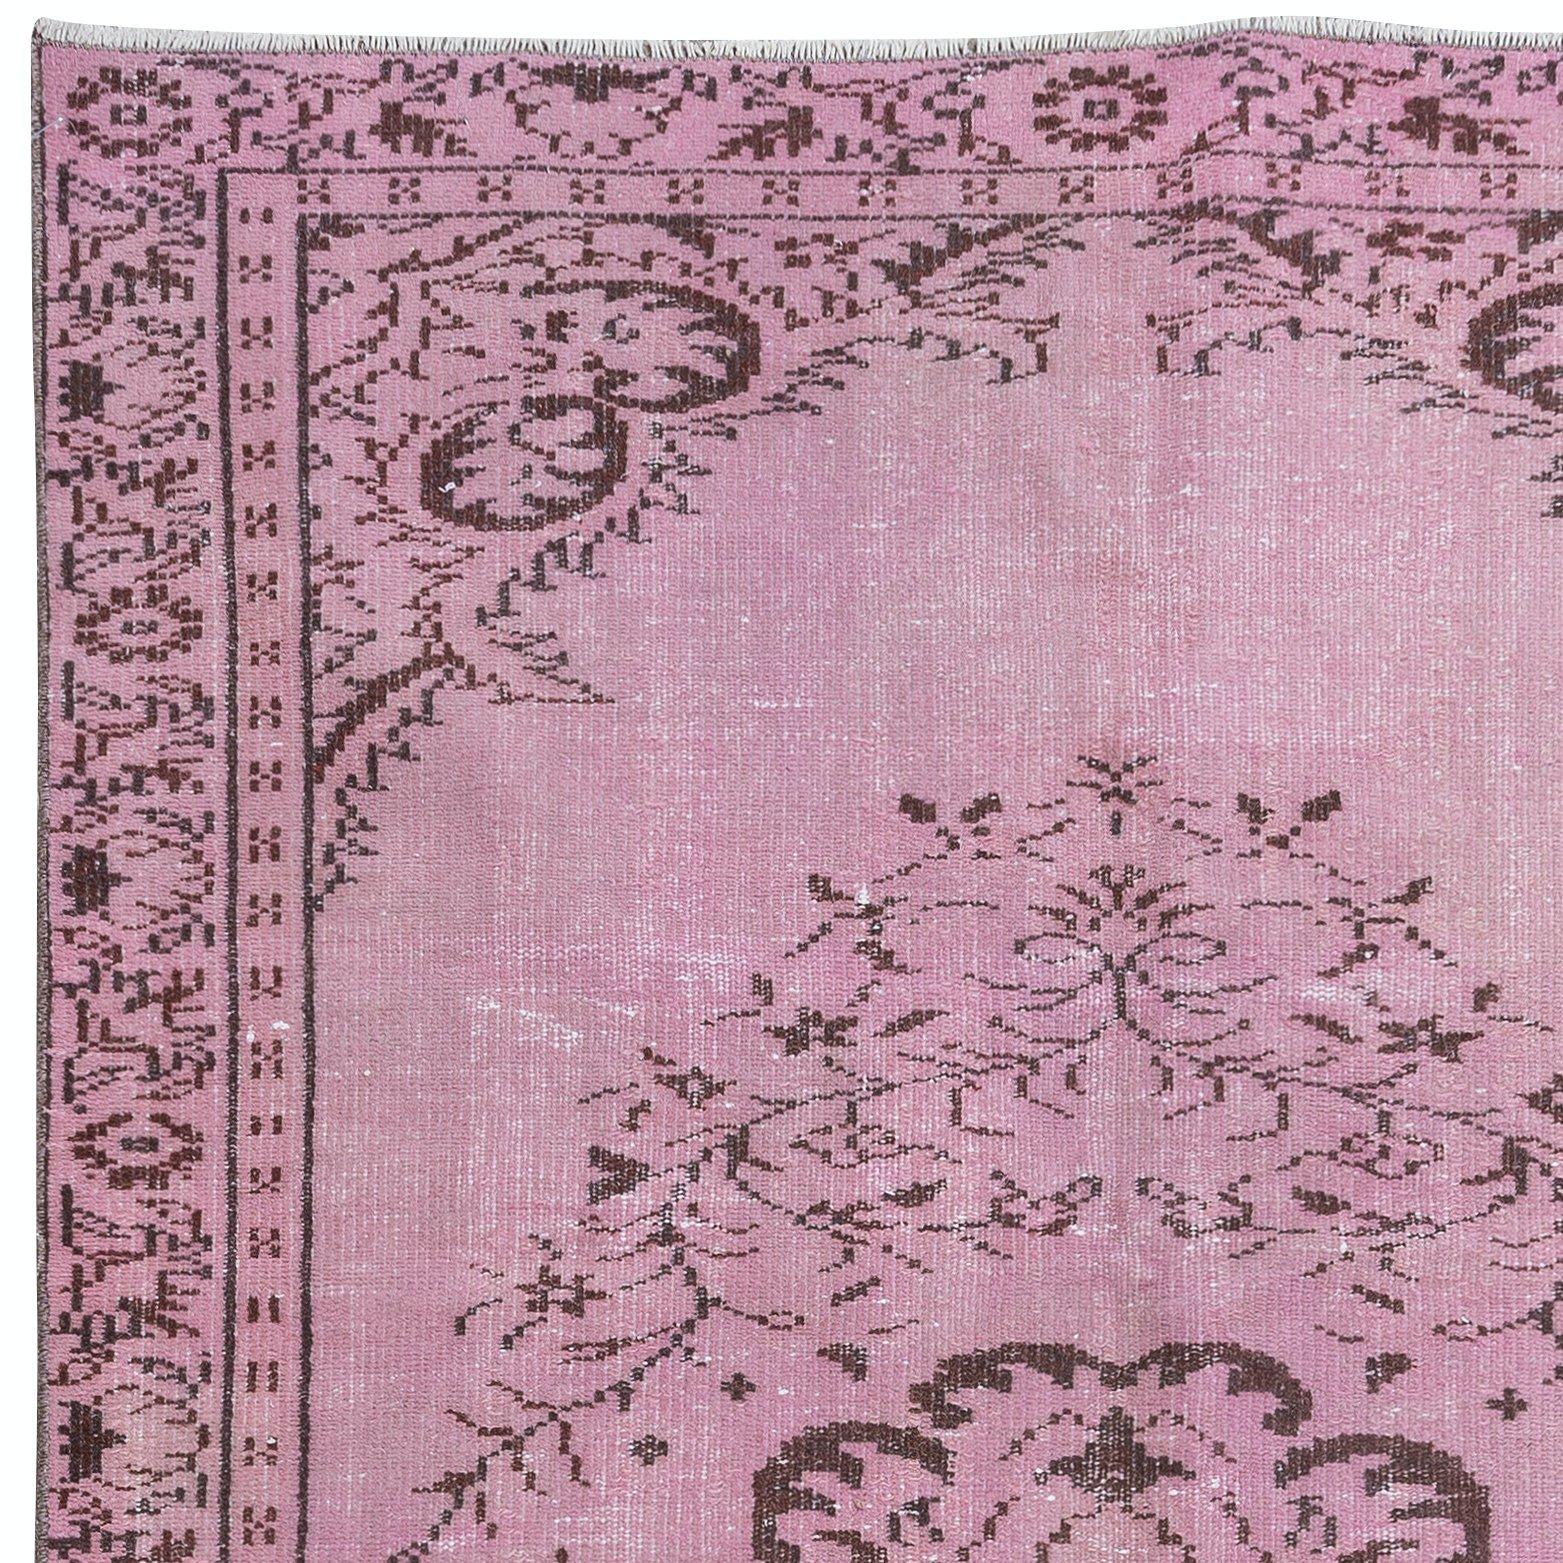 Hand-Woven 5x8.8 Ft Light Pink Decorative Handmade Turkish Area Rug for Modern Interiors